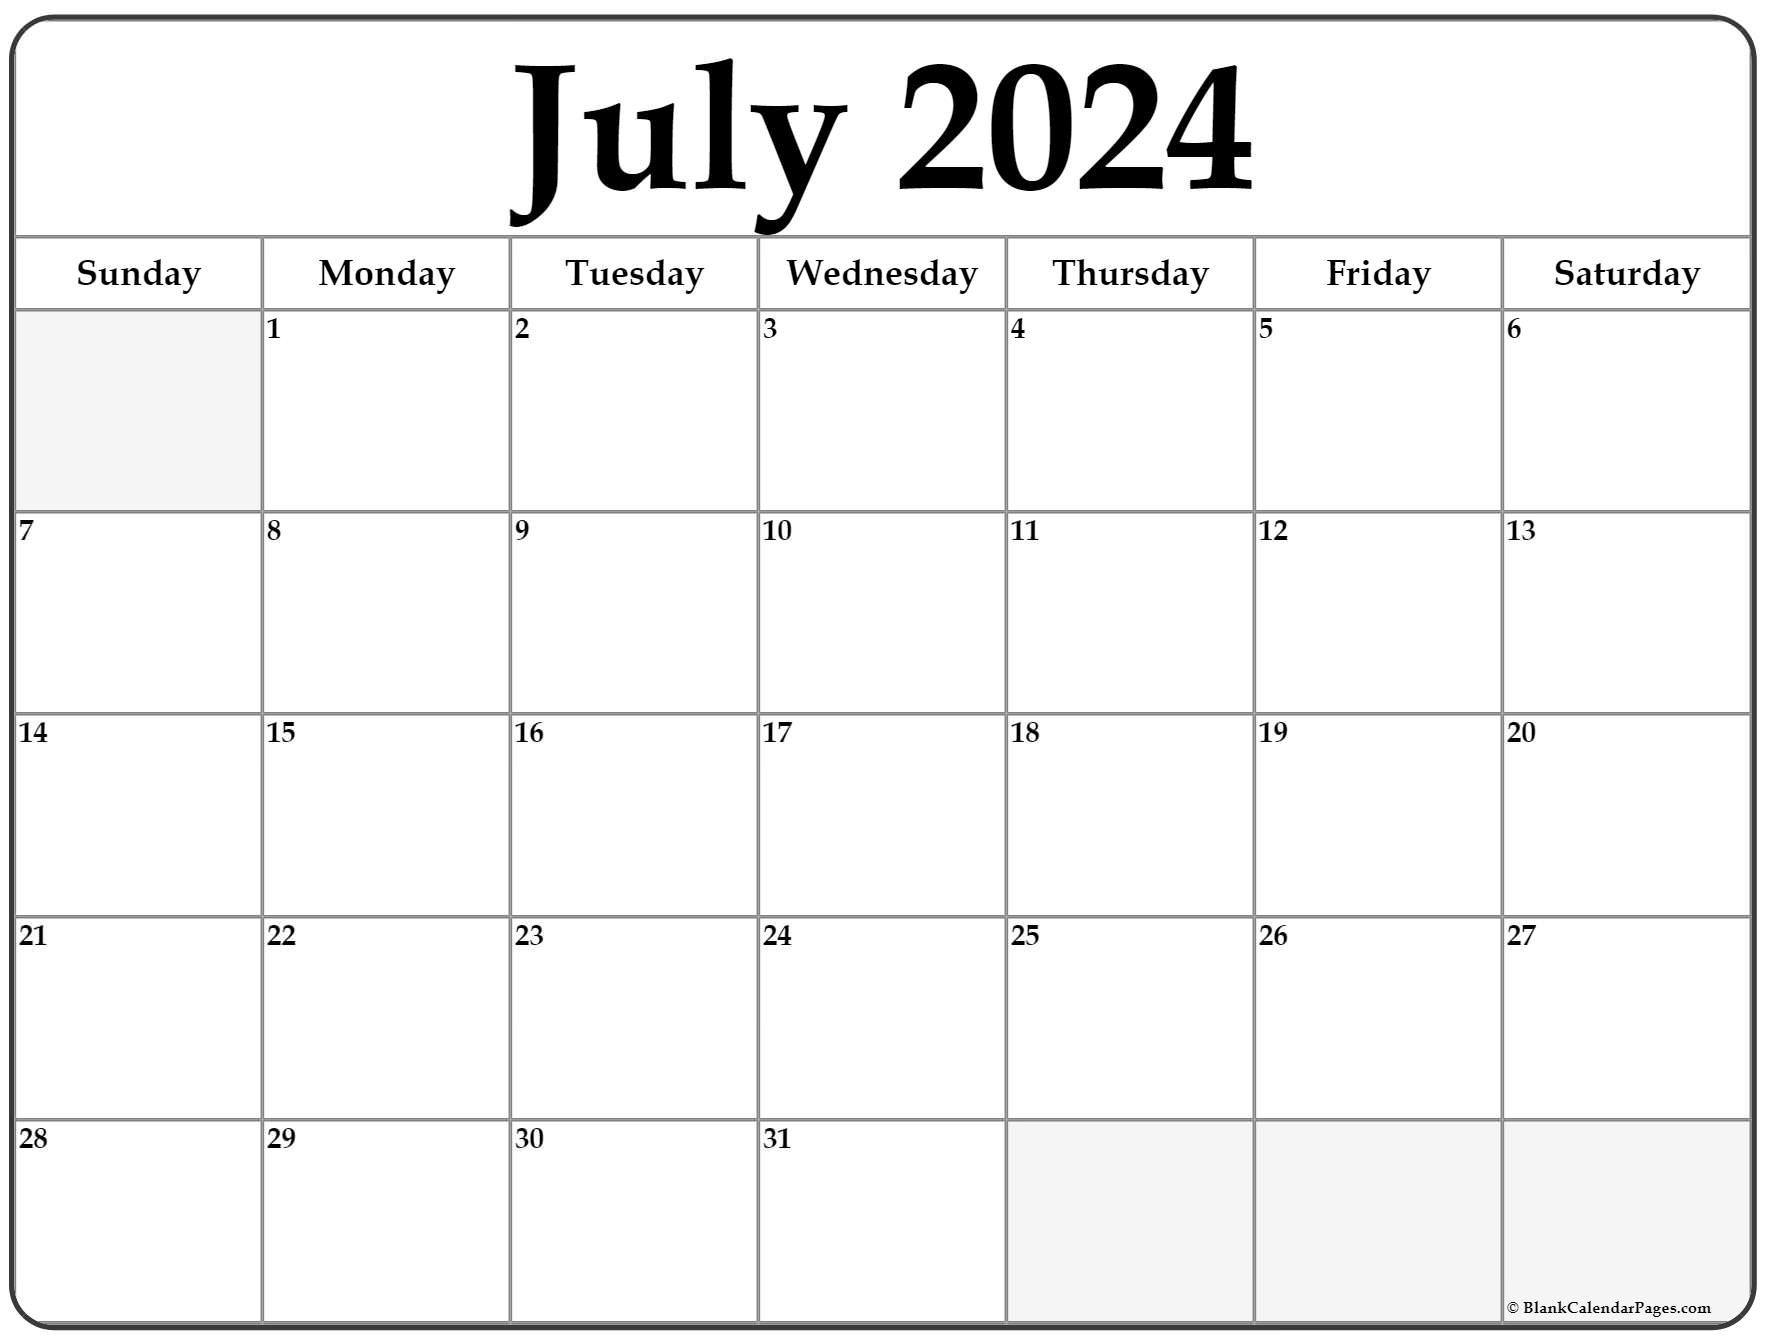 July 2022 calendar | free printable monthly calendars